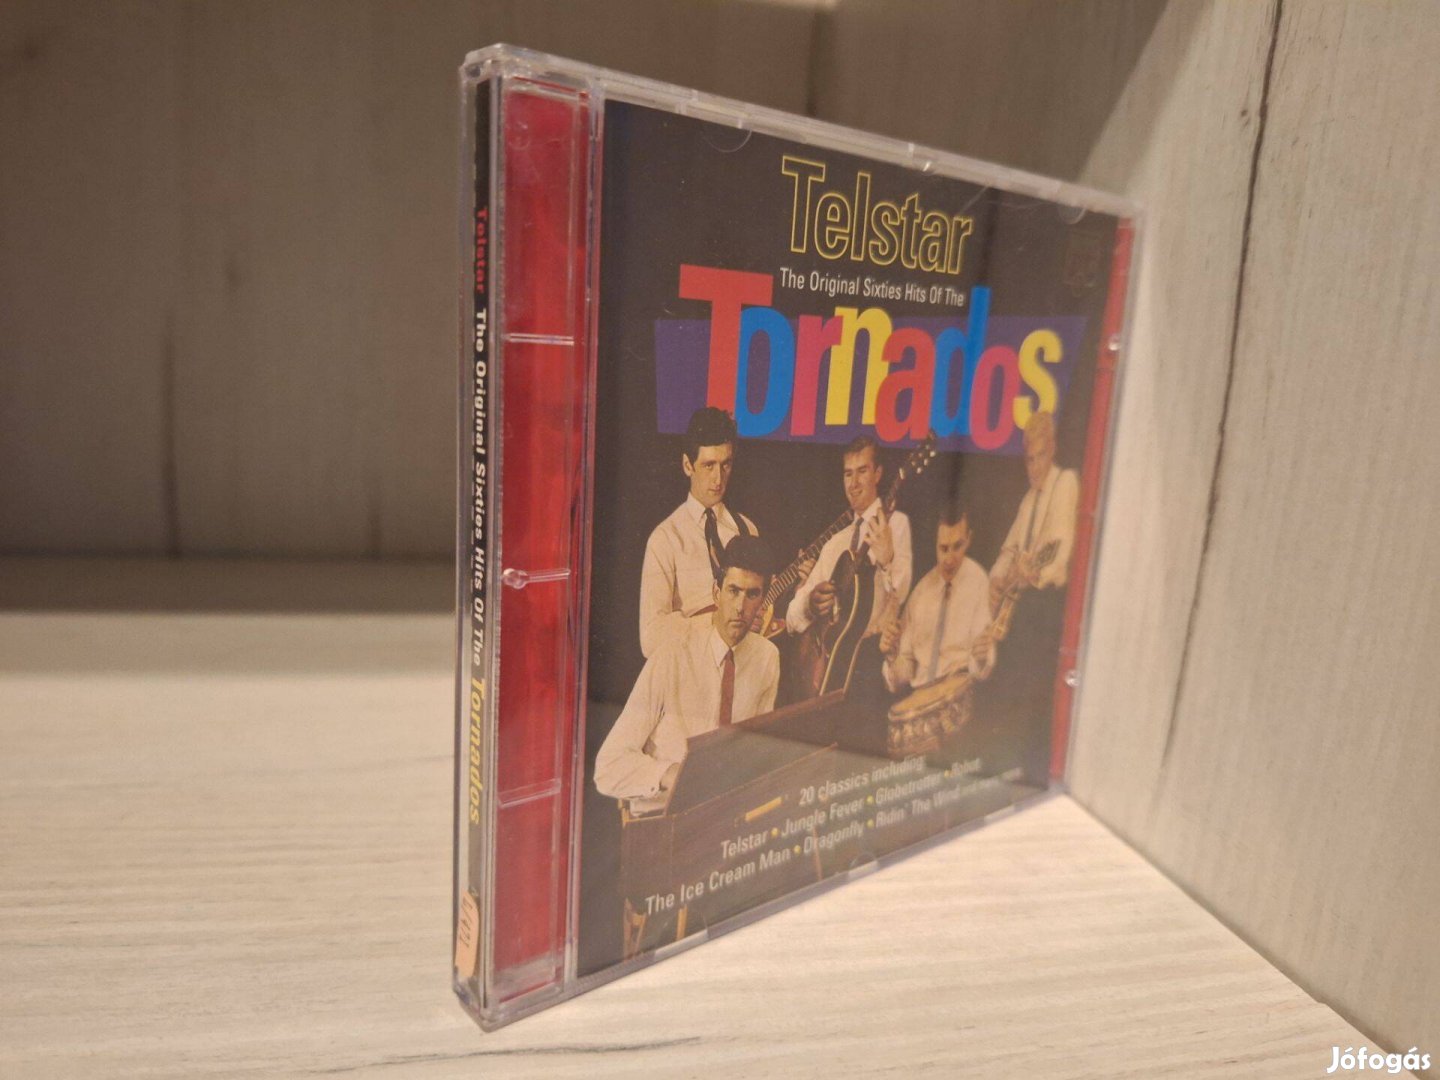 The Tornados - Telstar - The Original Sixties Hits Of The Tornados CD